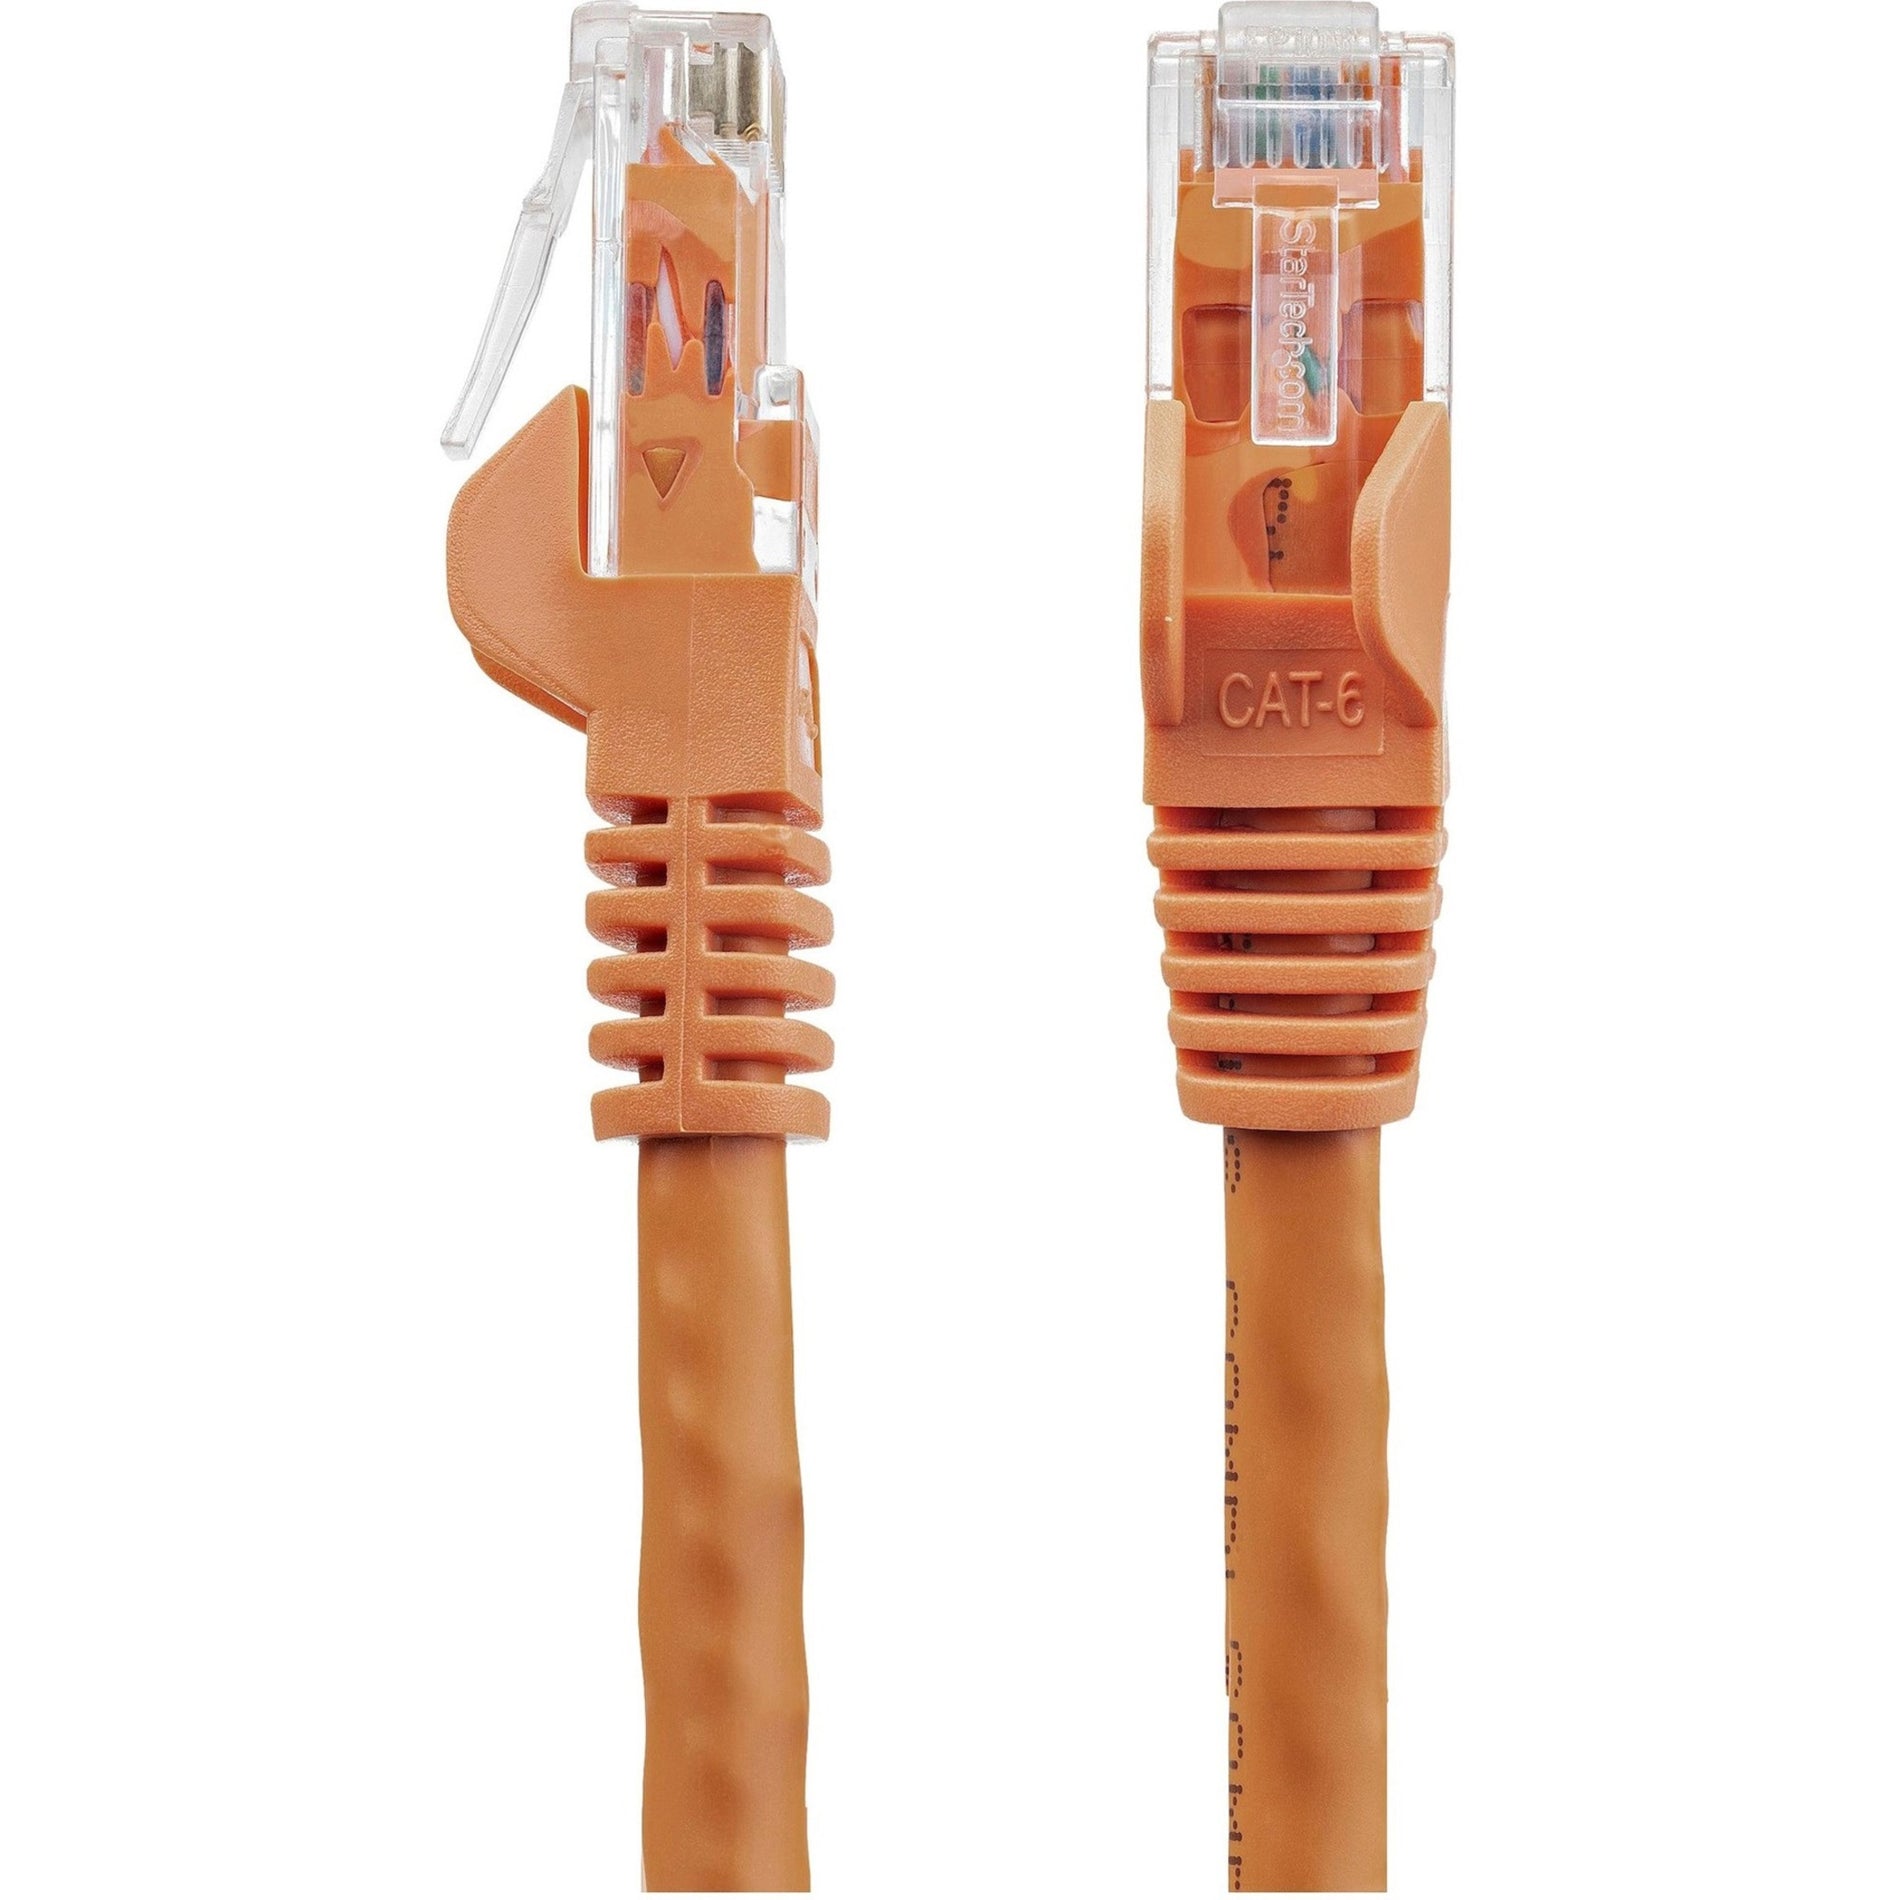 StarTech.com N6PATCH125OR Cat6 Patch Cable, 125ft Orange Ethernet Cable, Snagless RJ45 Connectors